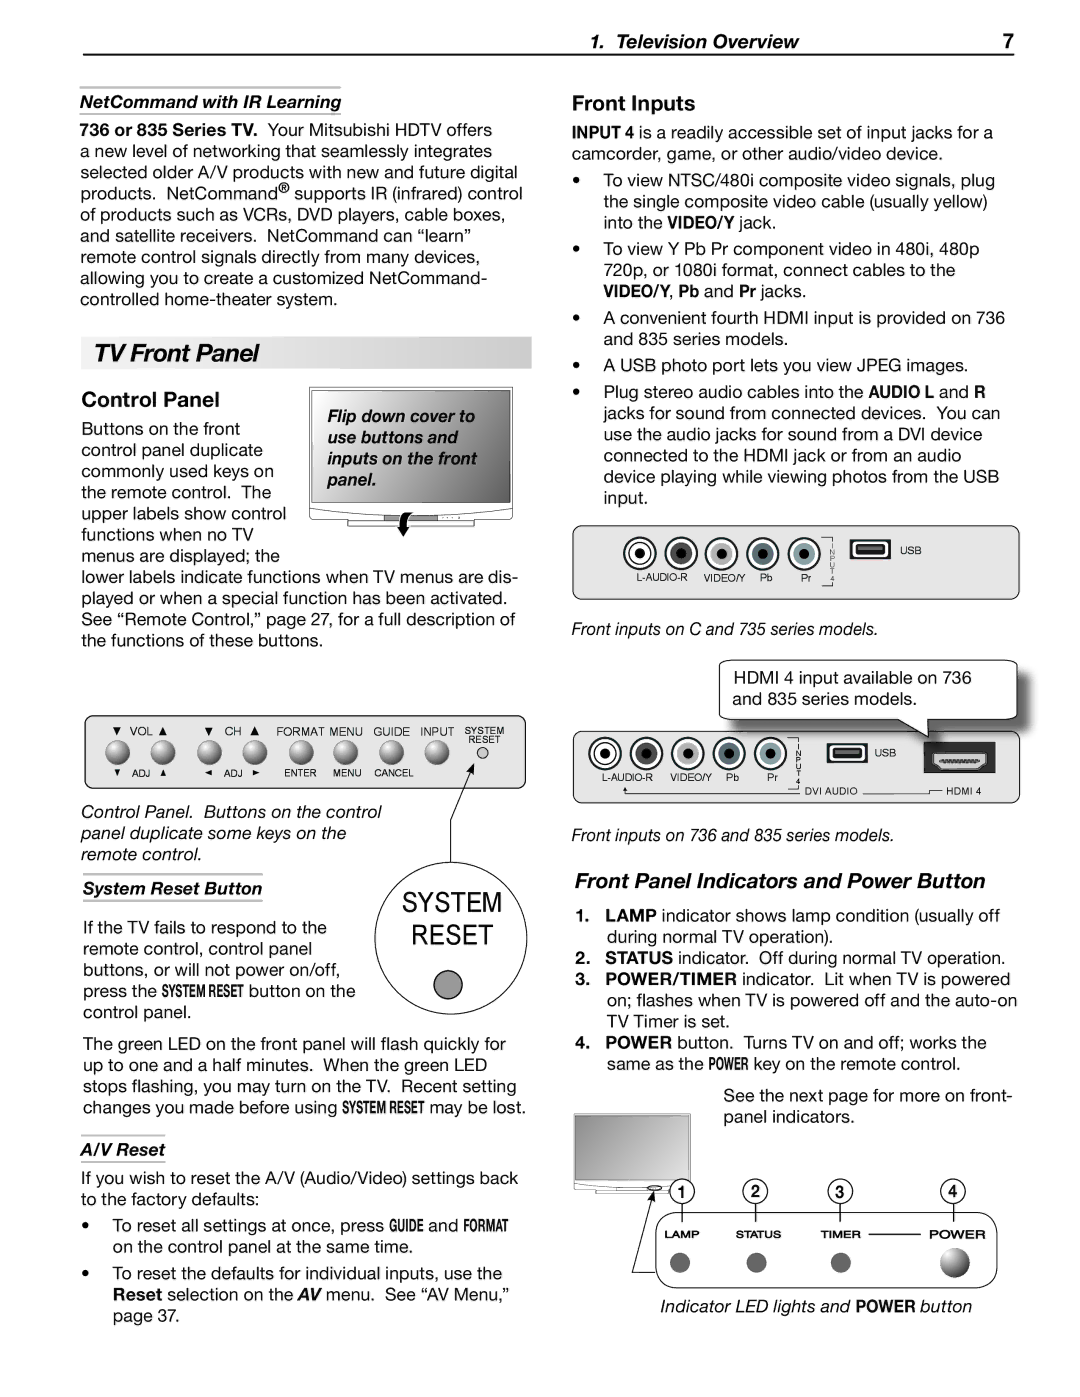 Mitsubishi Electronics WD-60C8 manual TV Front Panel, Control Panel, Front Inputs 